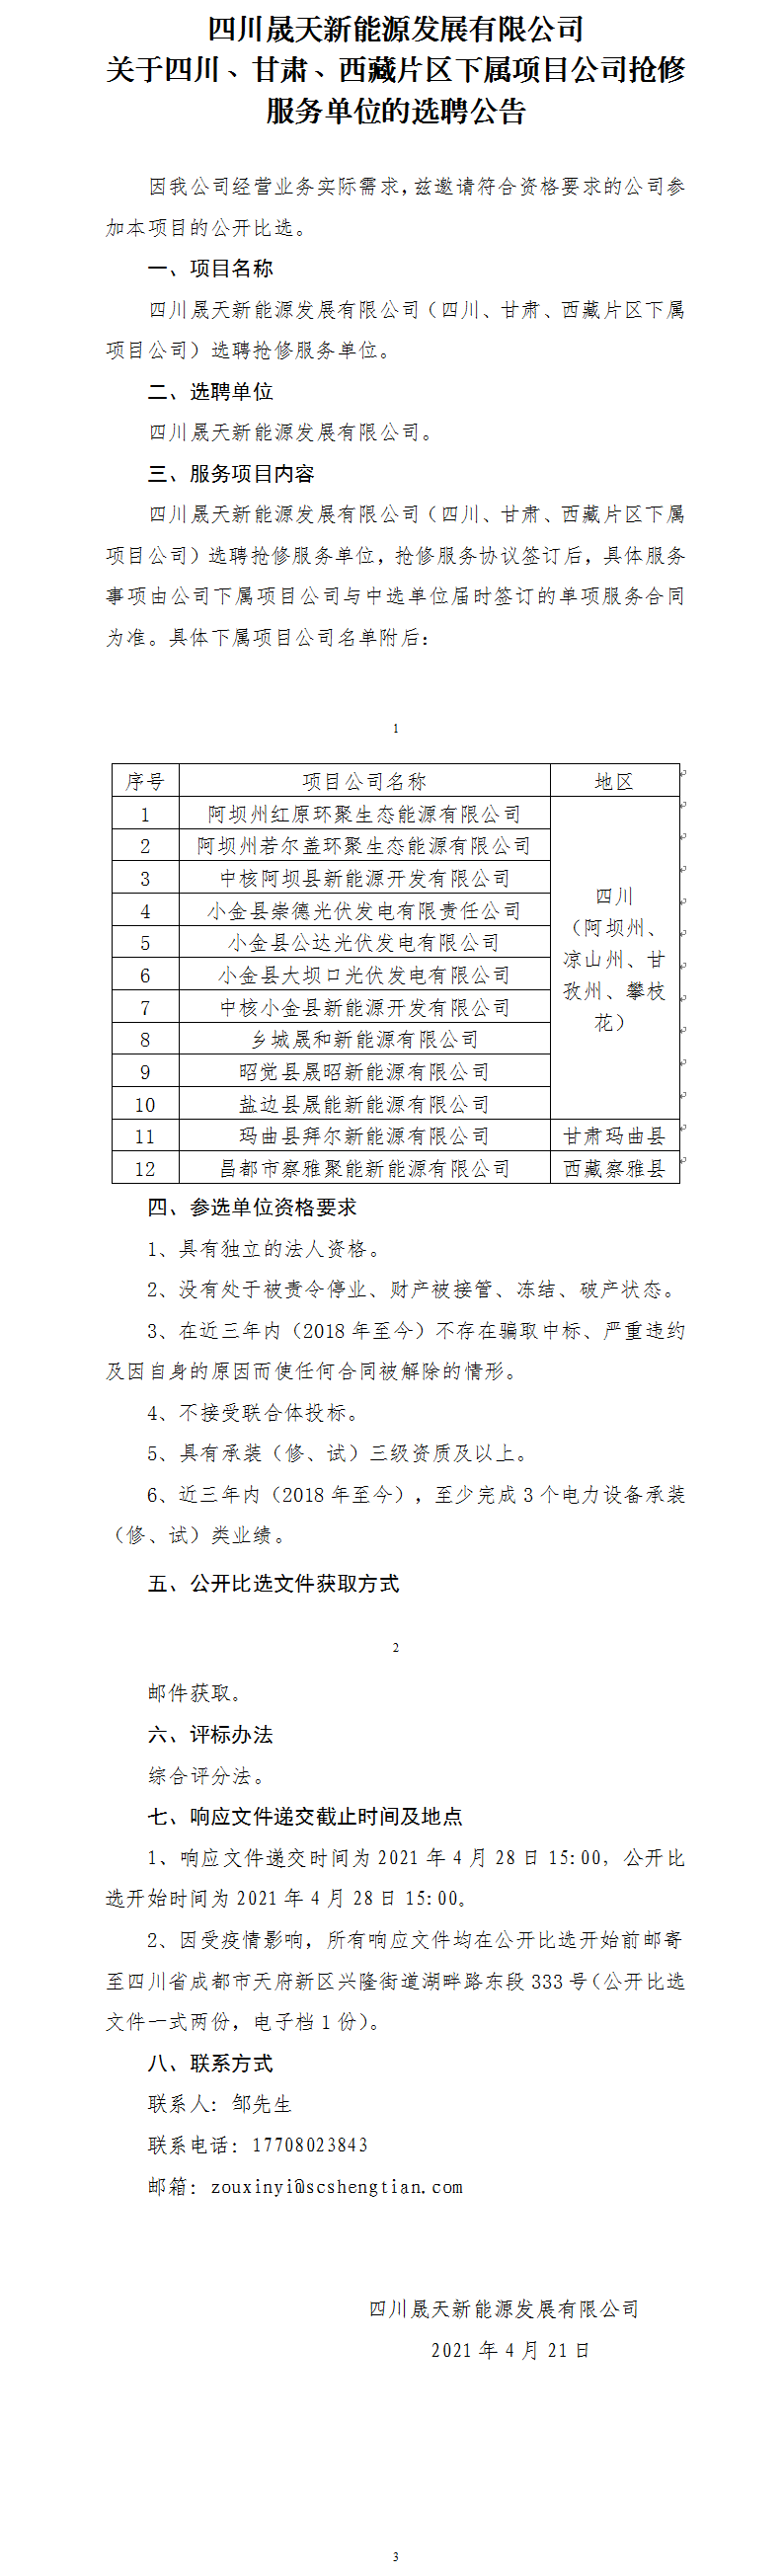 leyu乐鱼体育APP官方网站关于四川、甘肃、西藏片区下属项目公司抢修服务单位的选聘公告.png